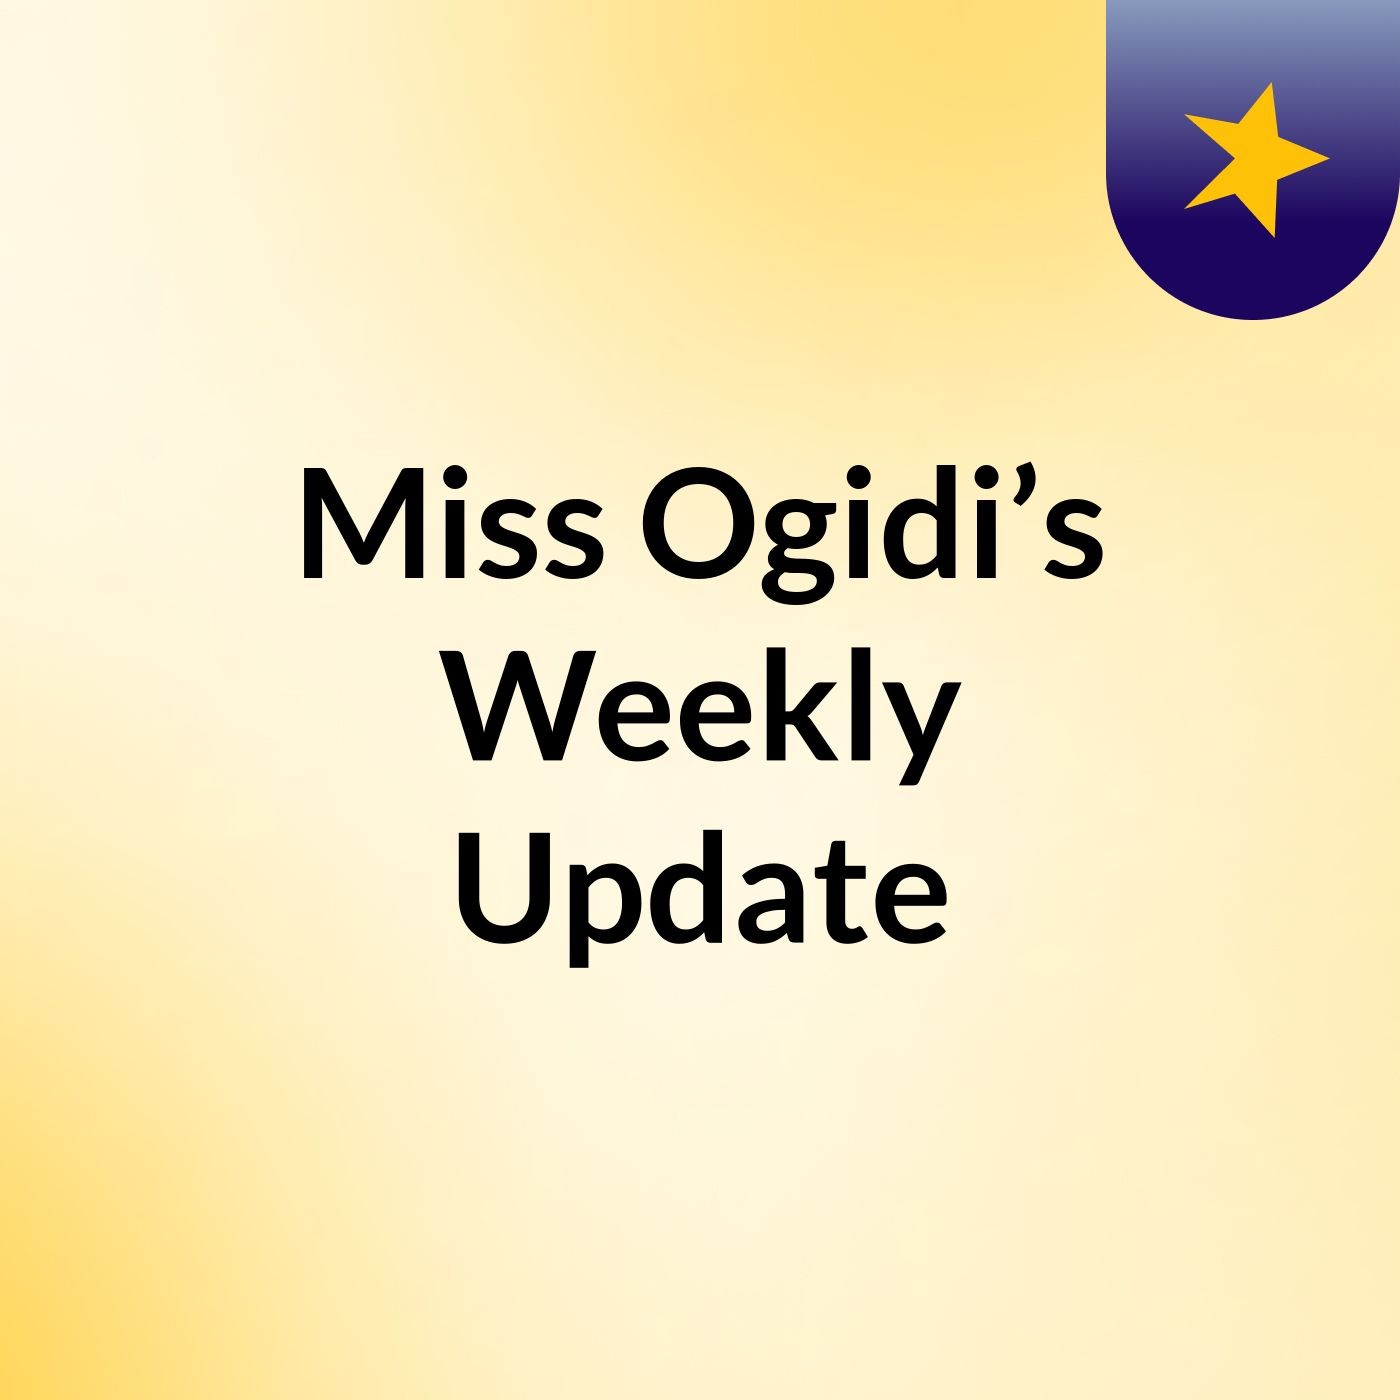 Miss Ogidi’s Weekly Update